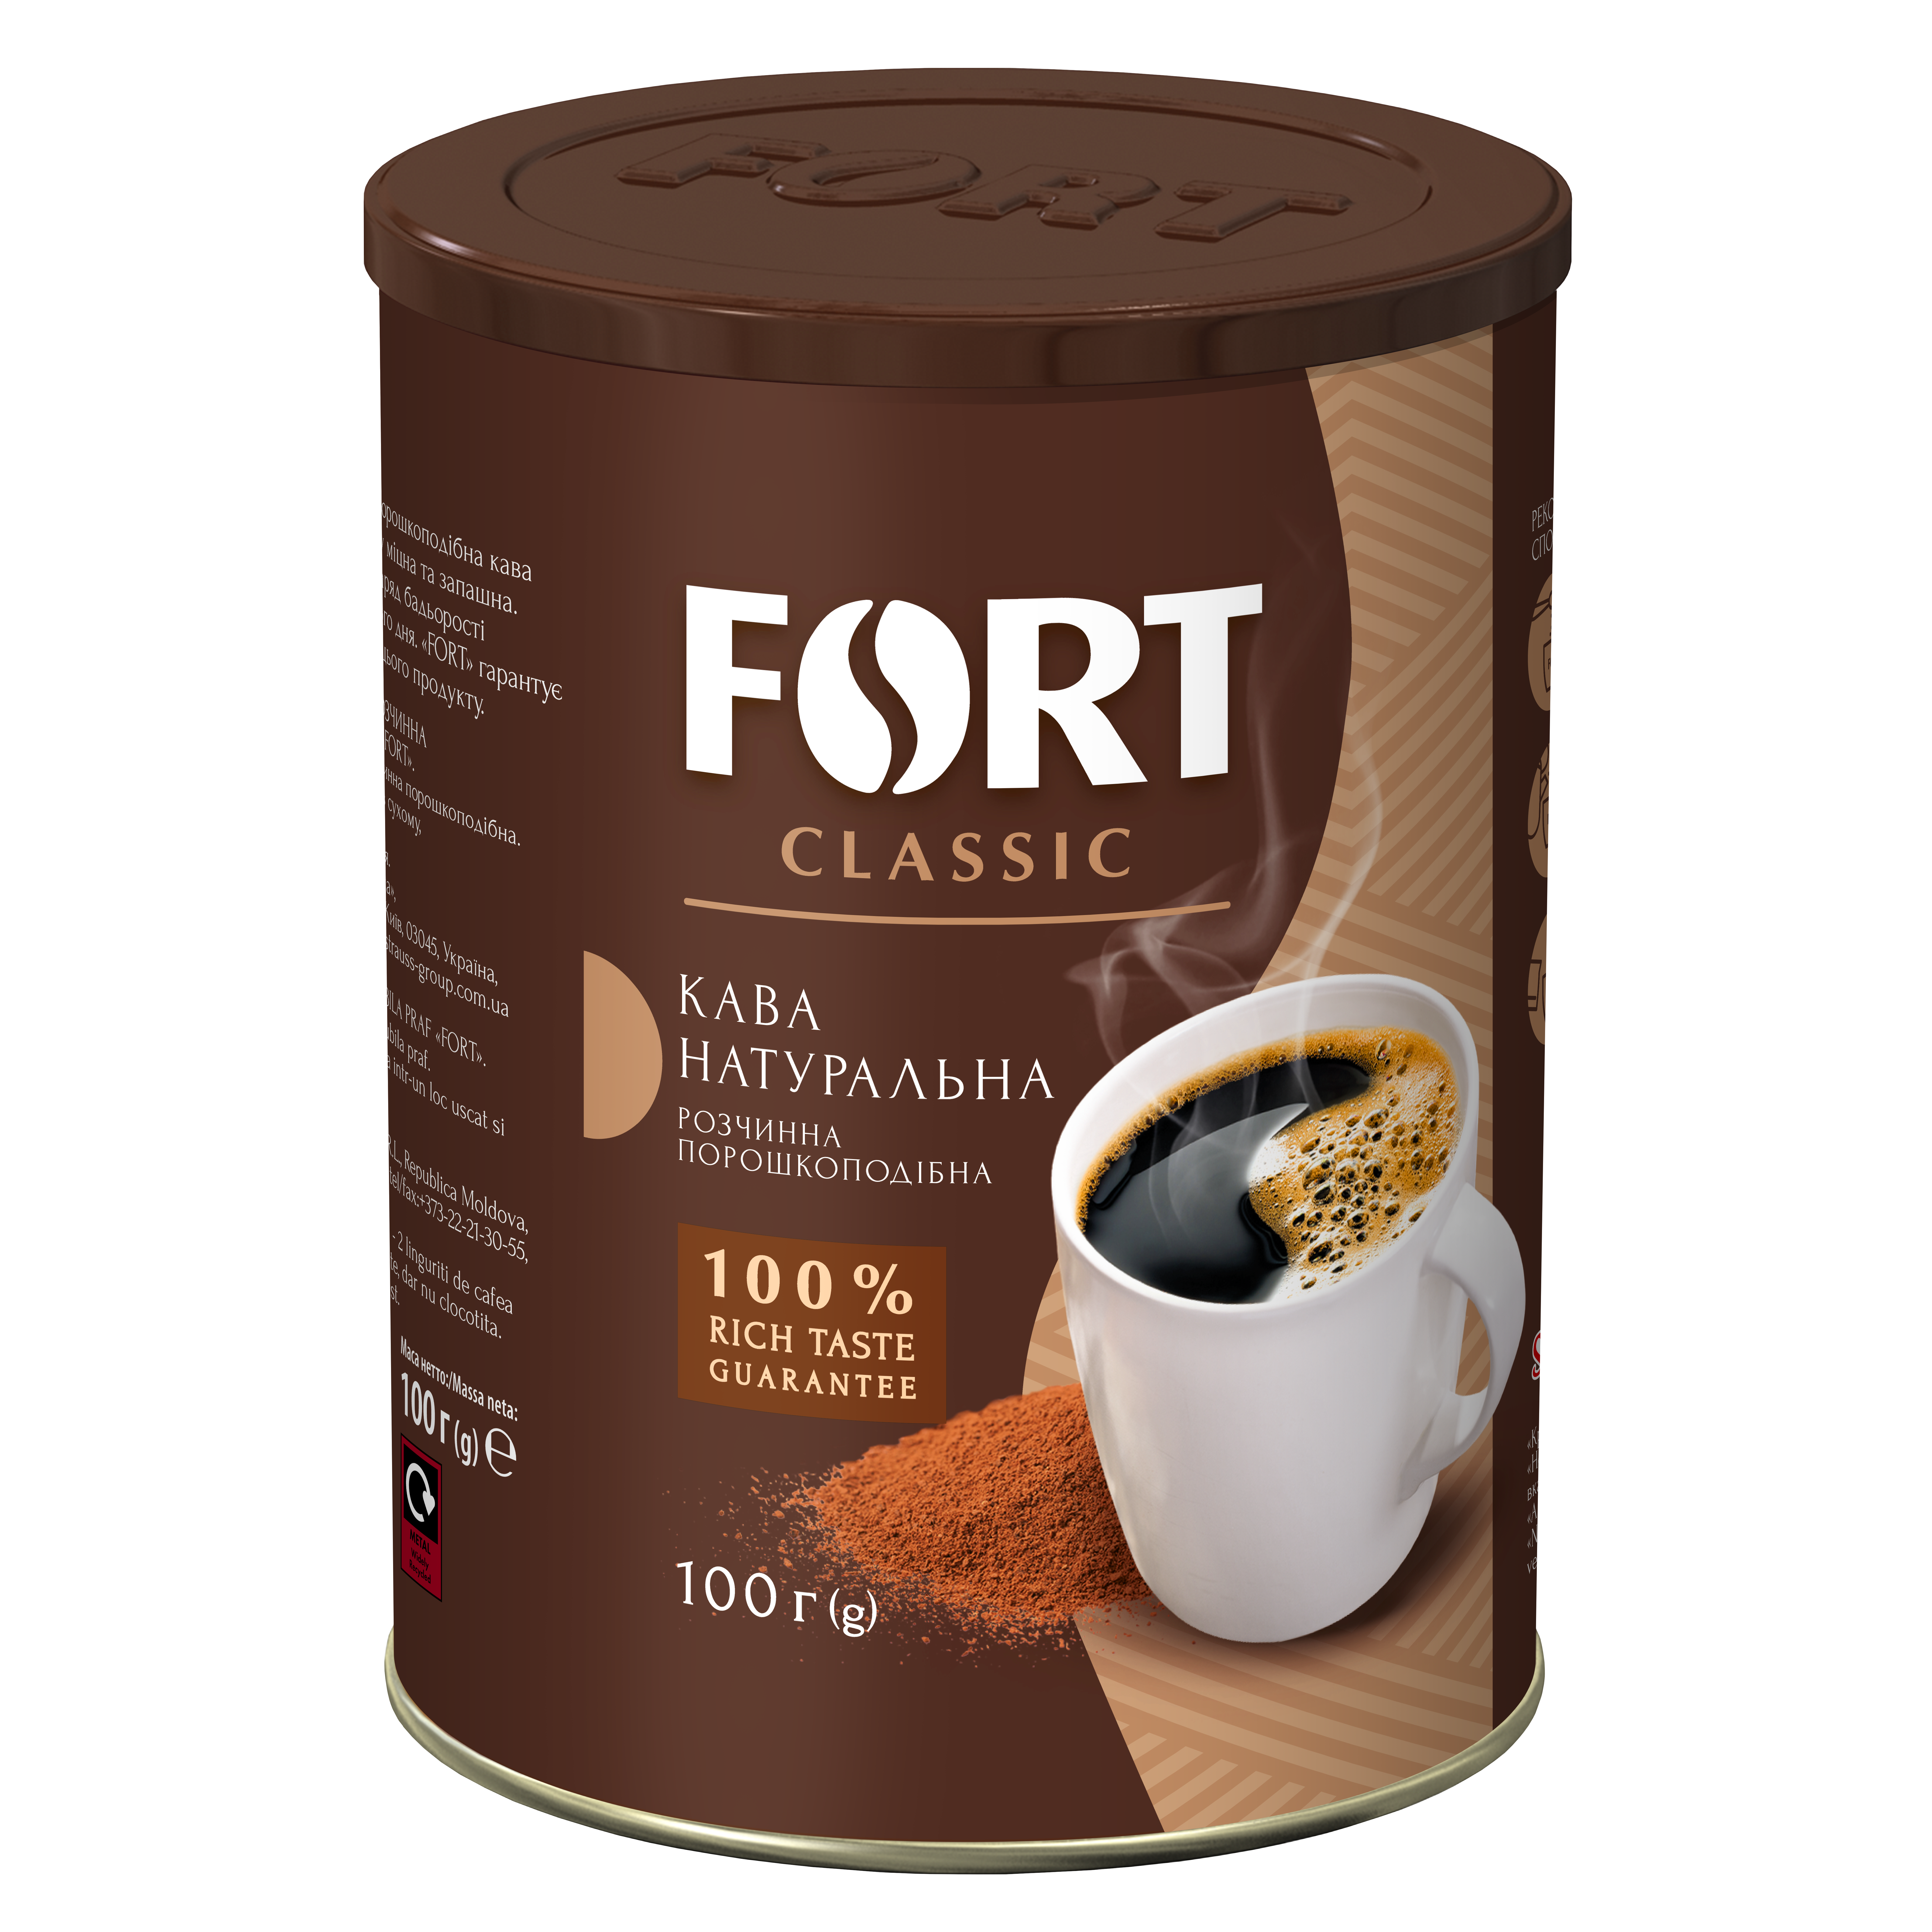 Instant powder coffee FORT